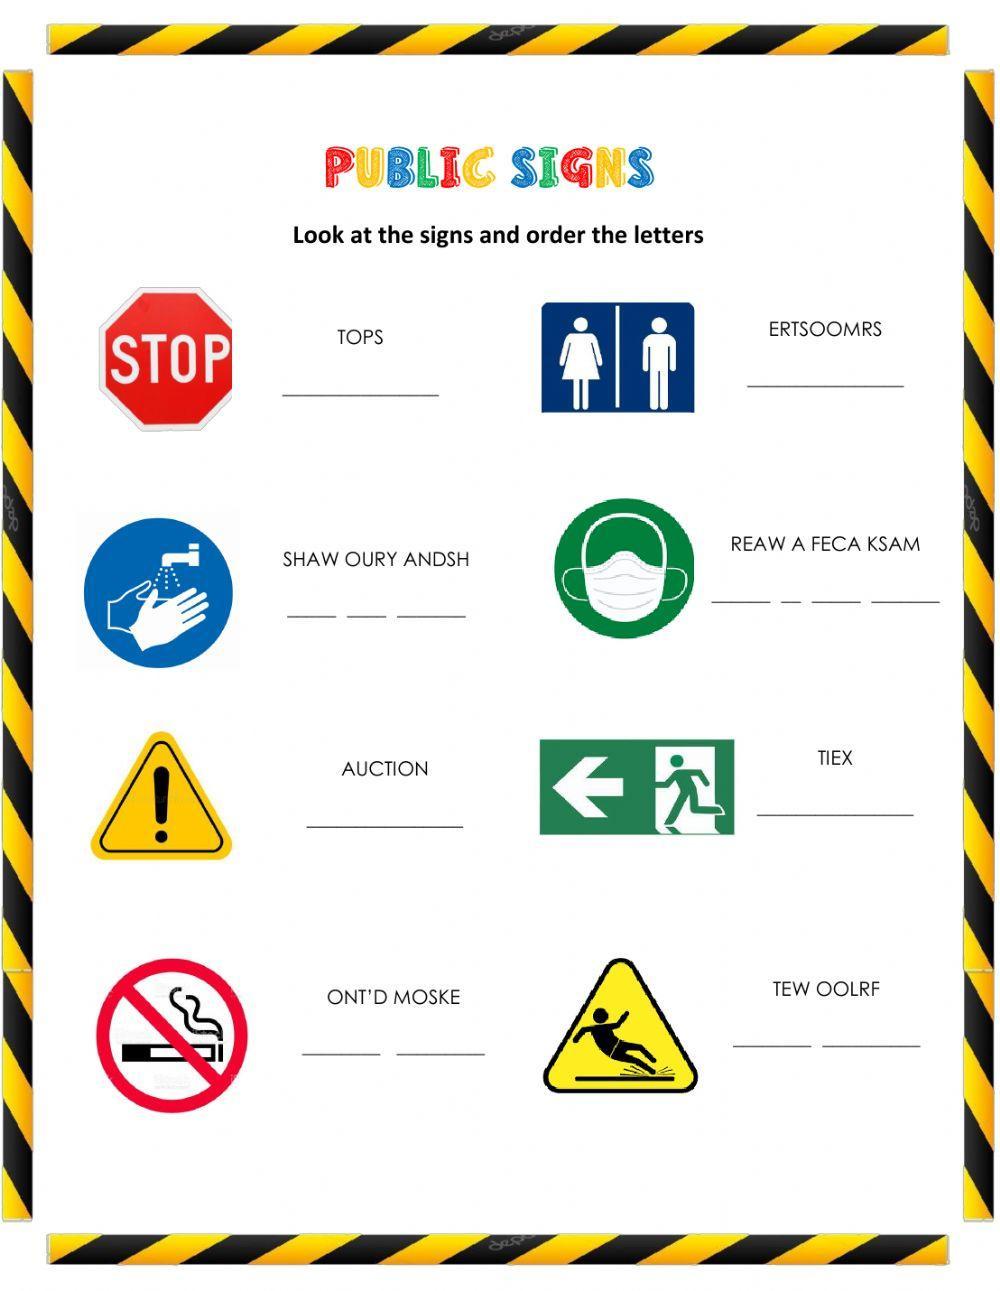 Public signs